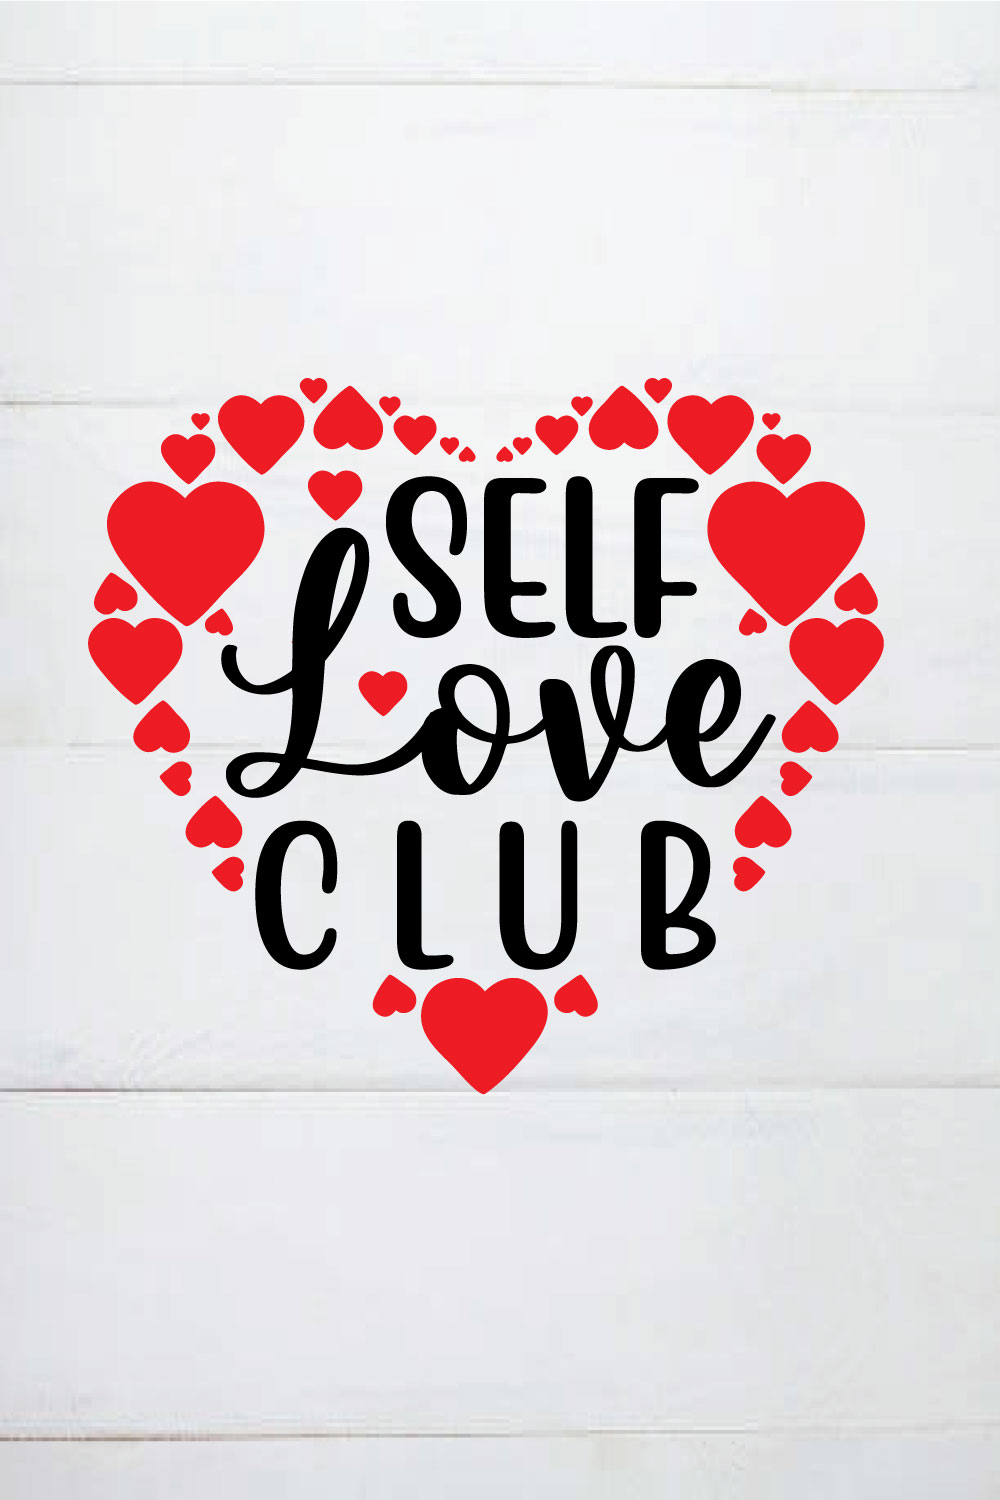 self love club shirt /valentine day svg pinterest preview image.